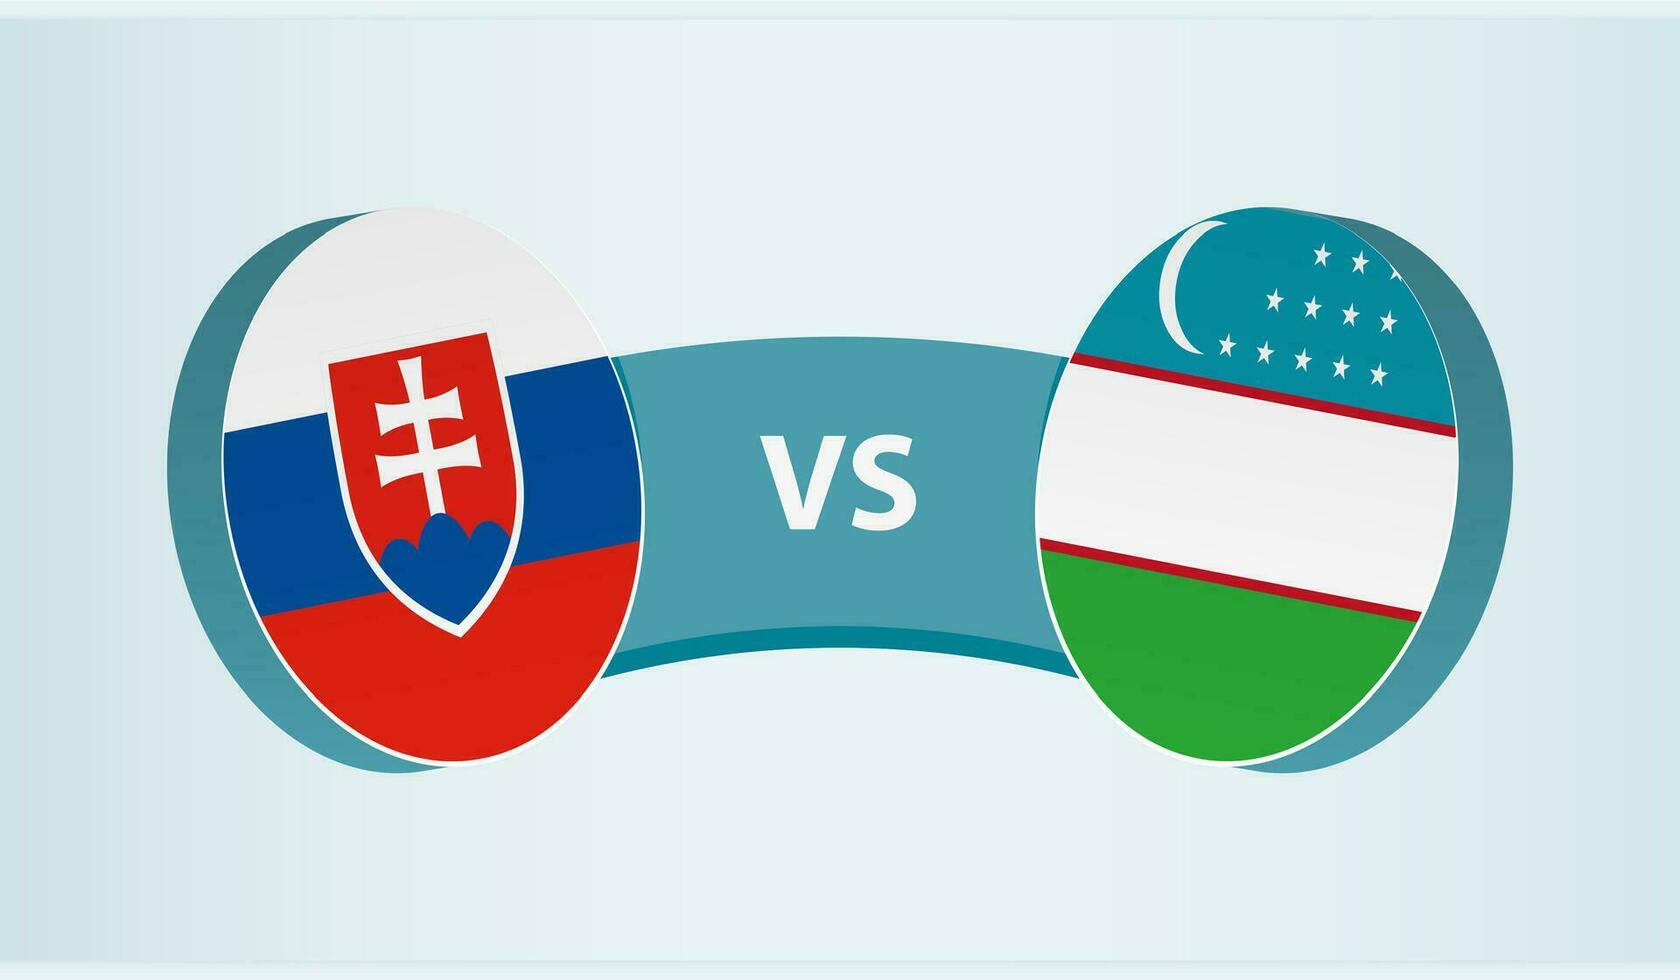 Slovakia versus Uzbekistan, team sports competition concept. vector